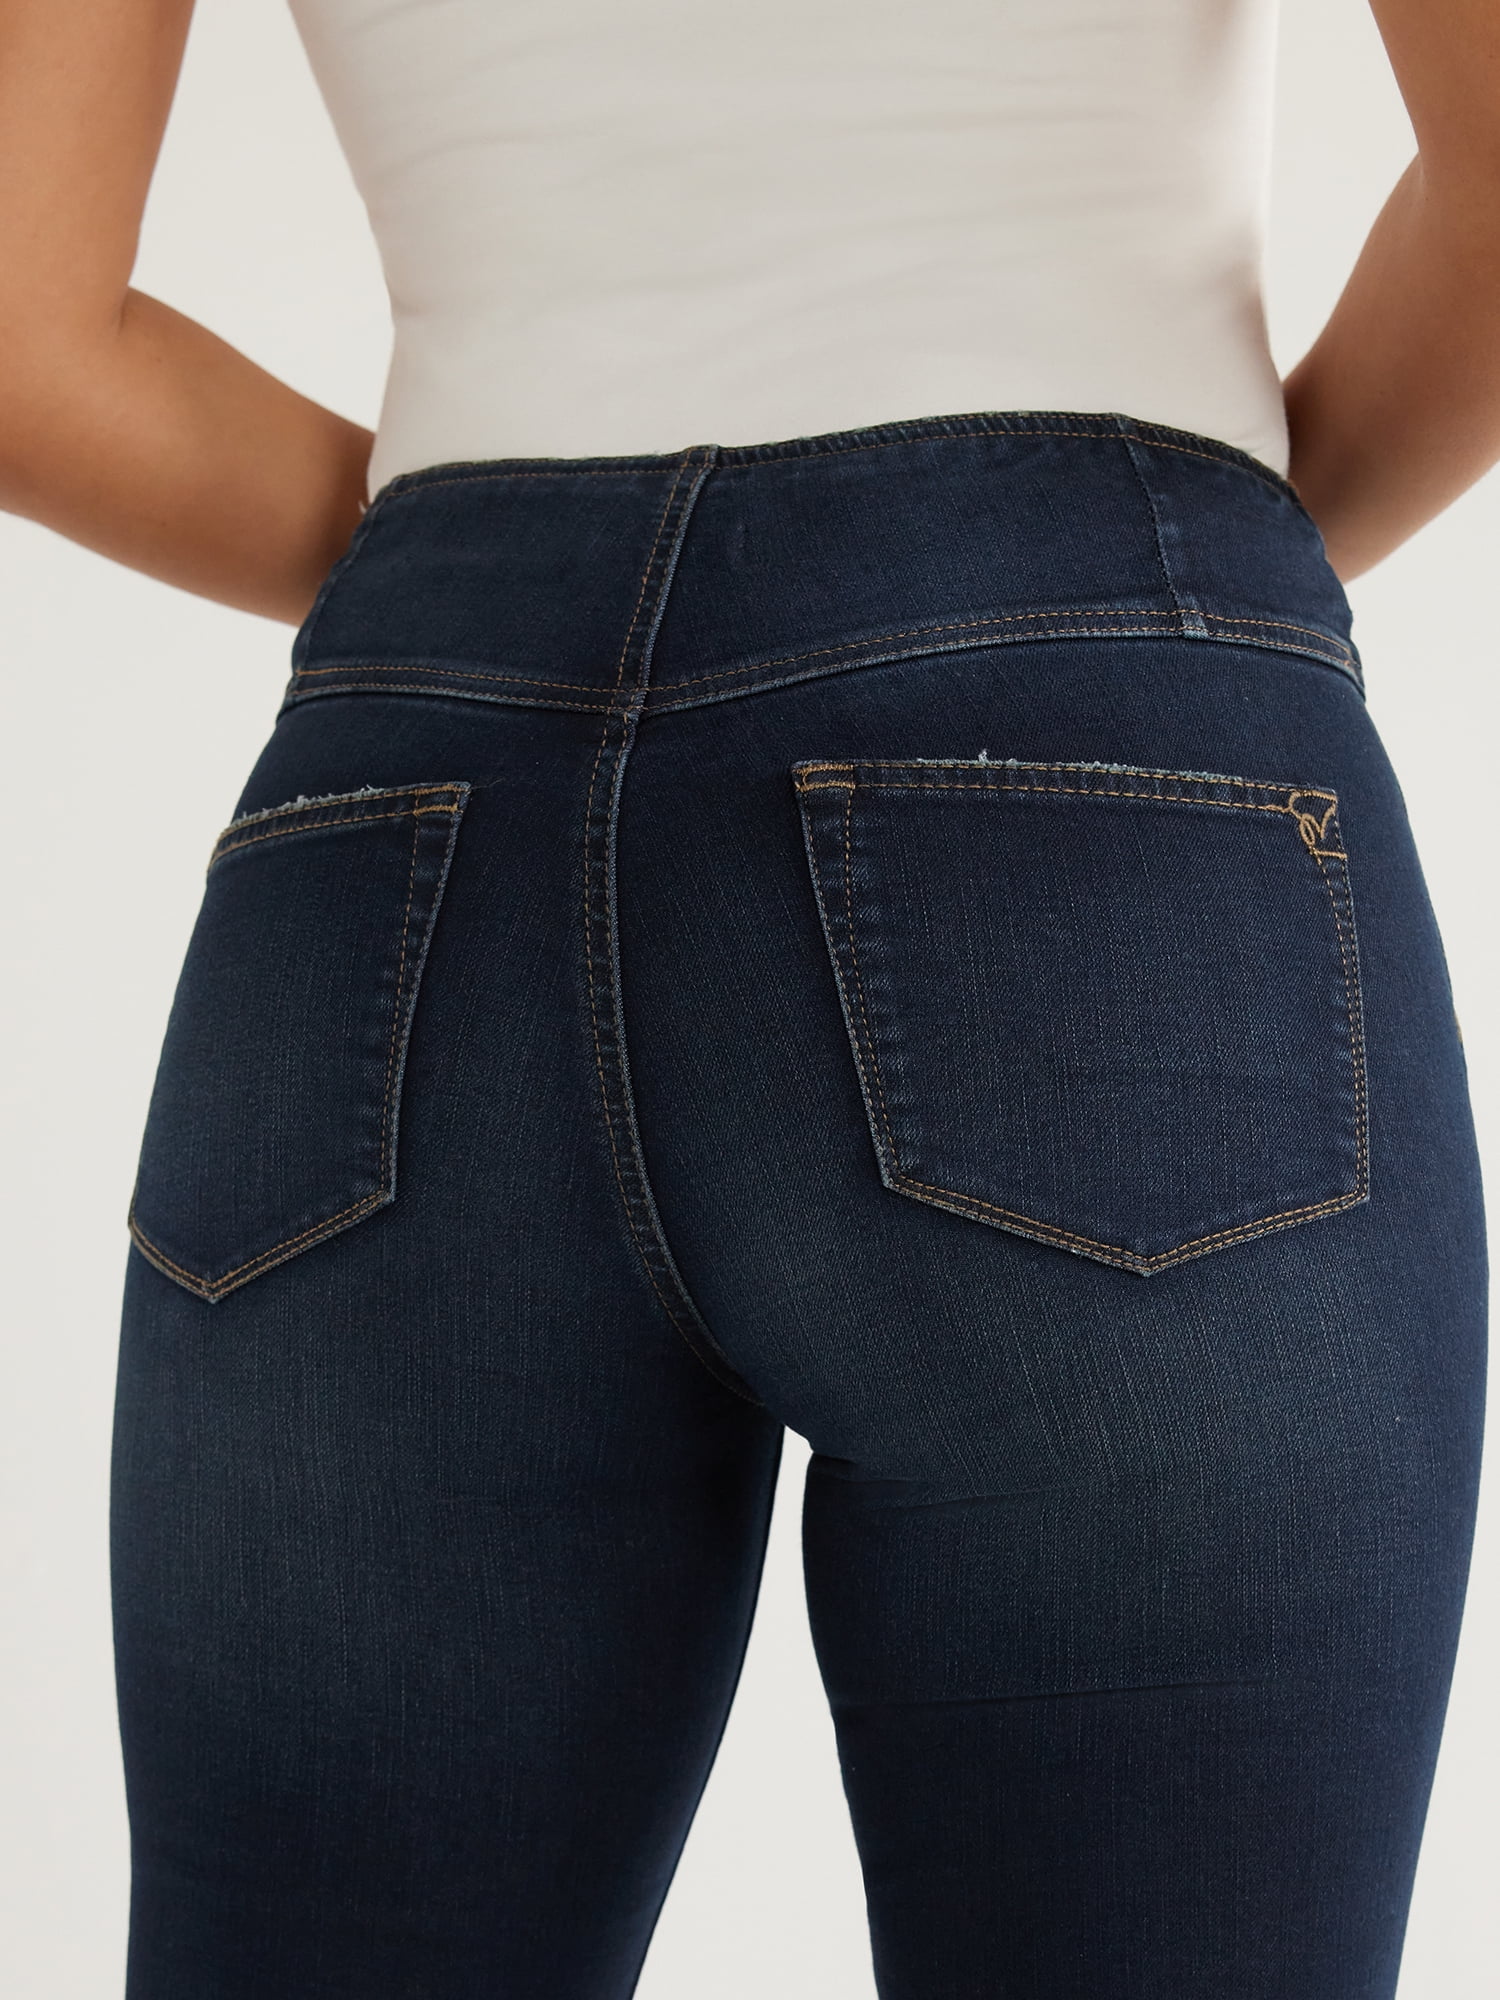 Sofia Jeans Women's Melisa Flare High Rise Coated Pants, 33.5